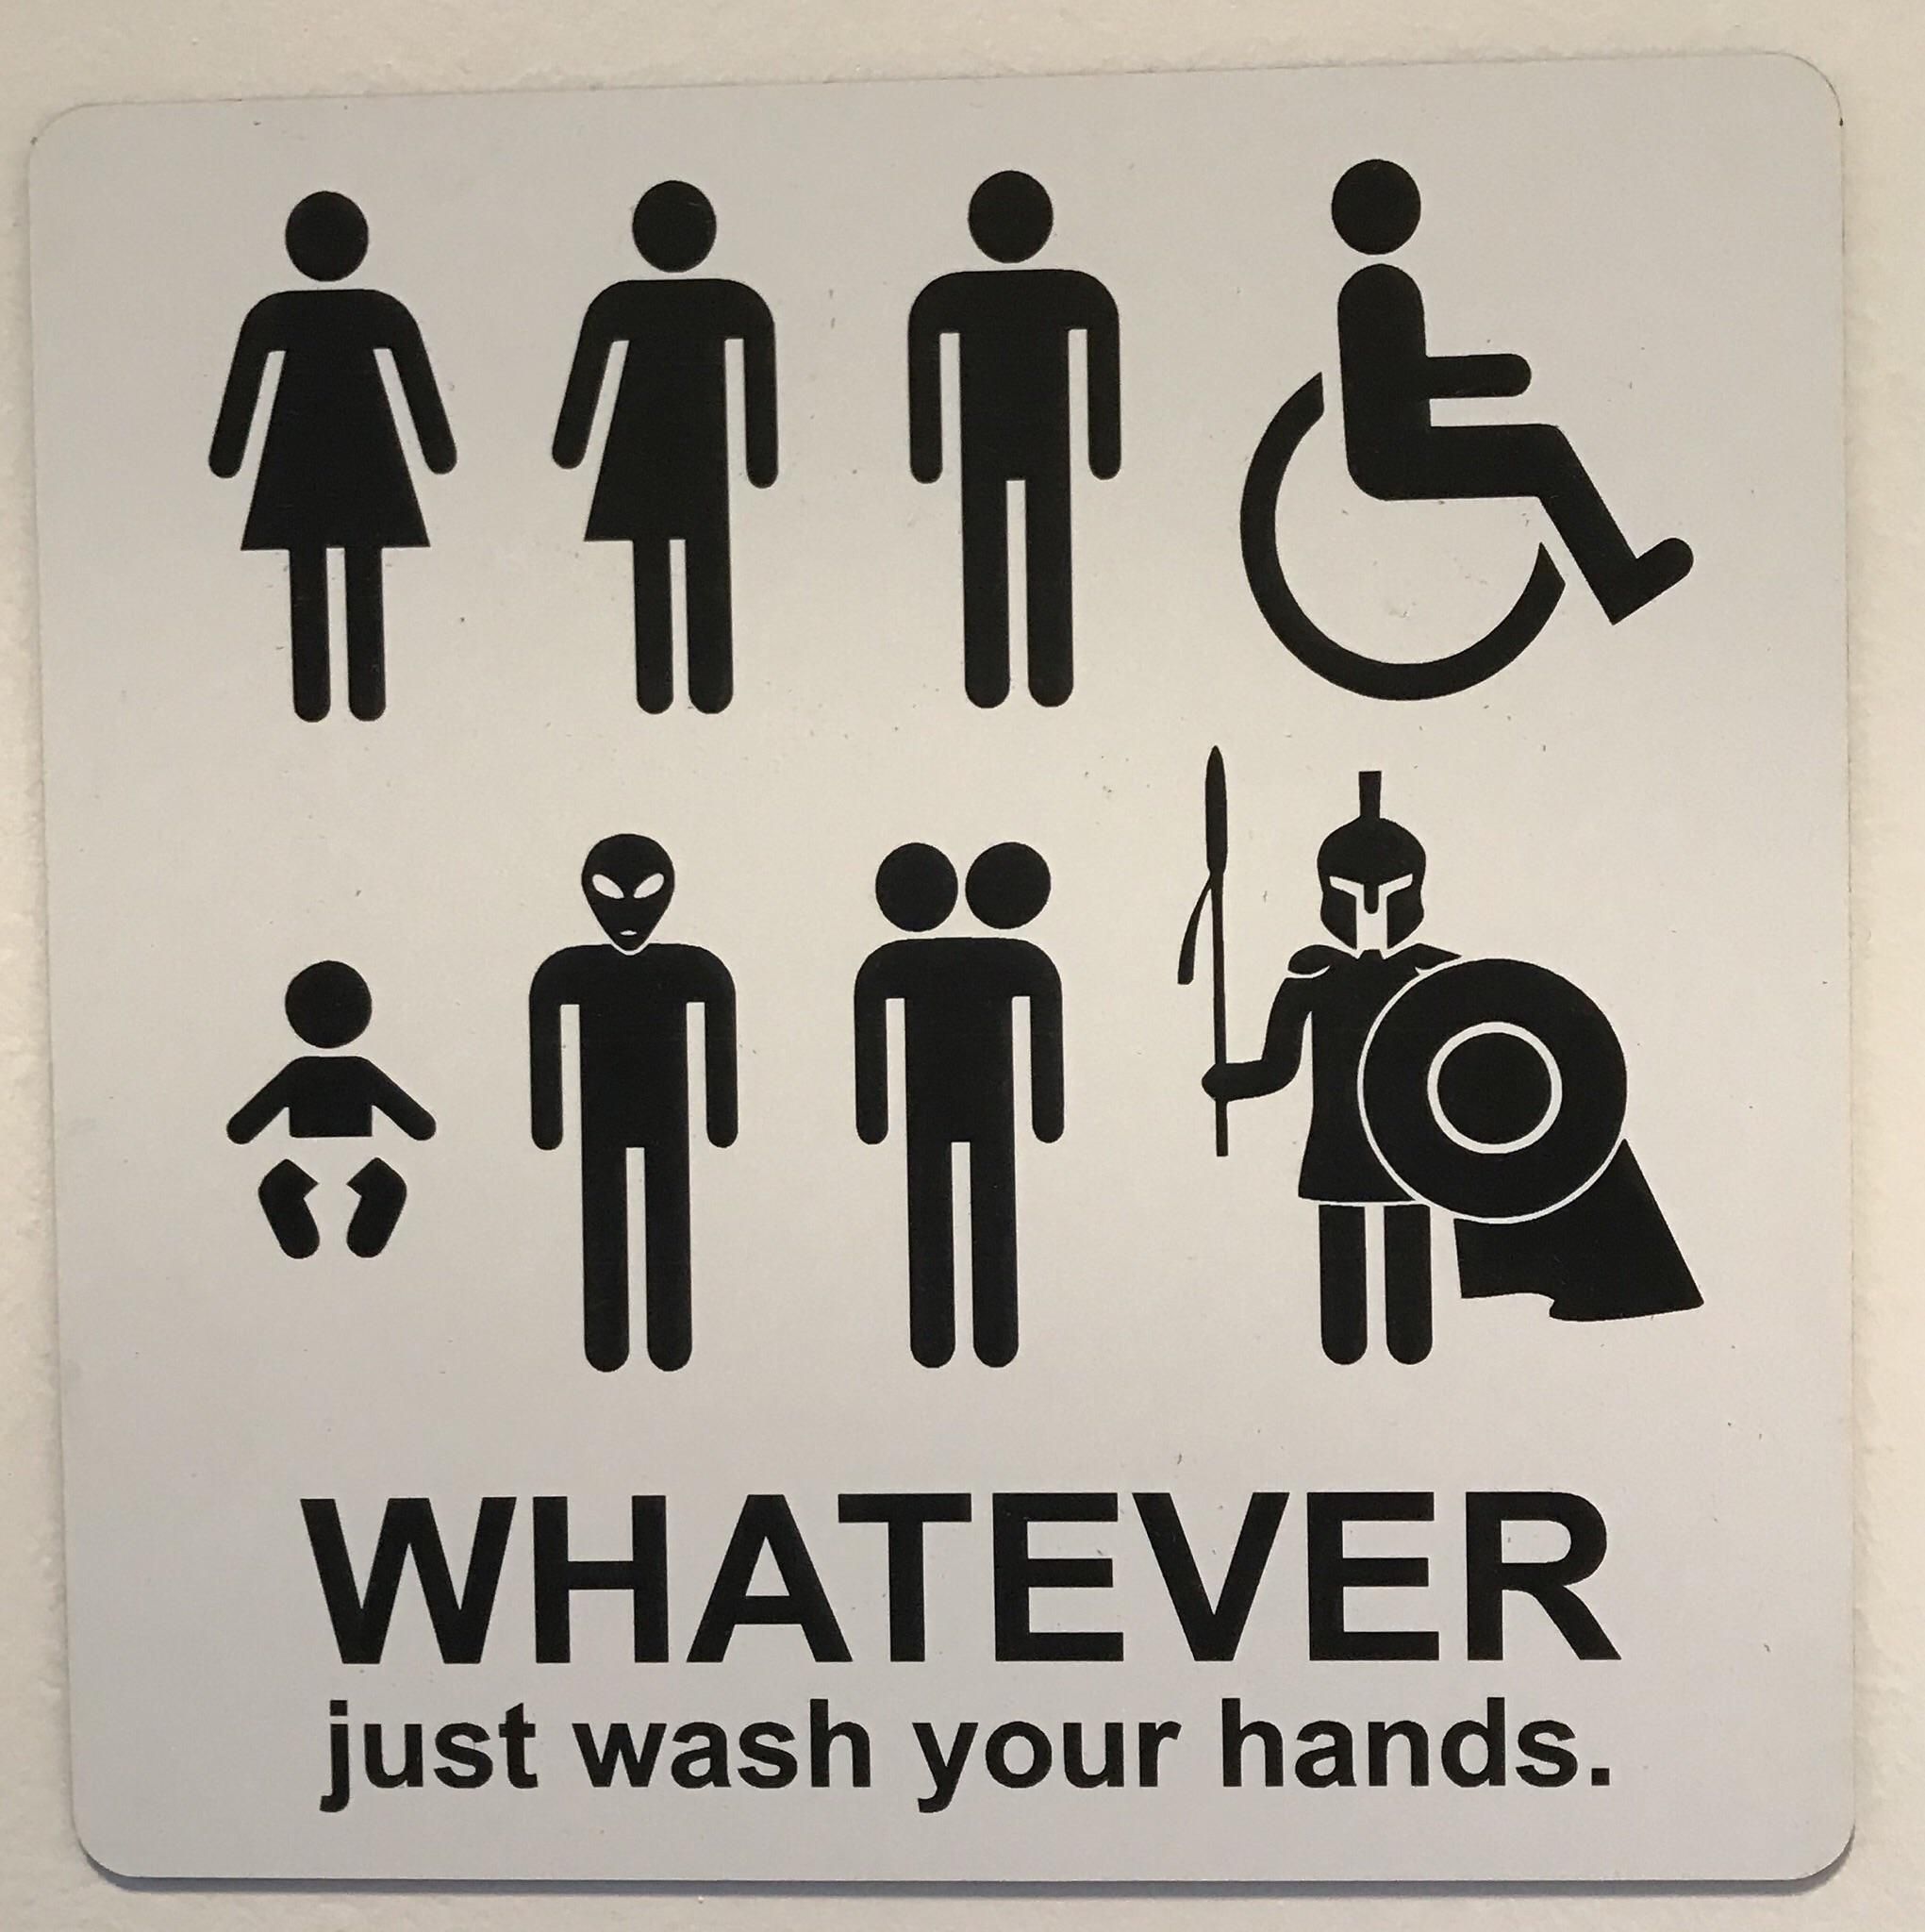 Public Bathroom sign